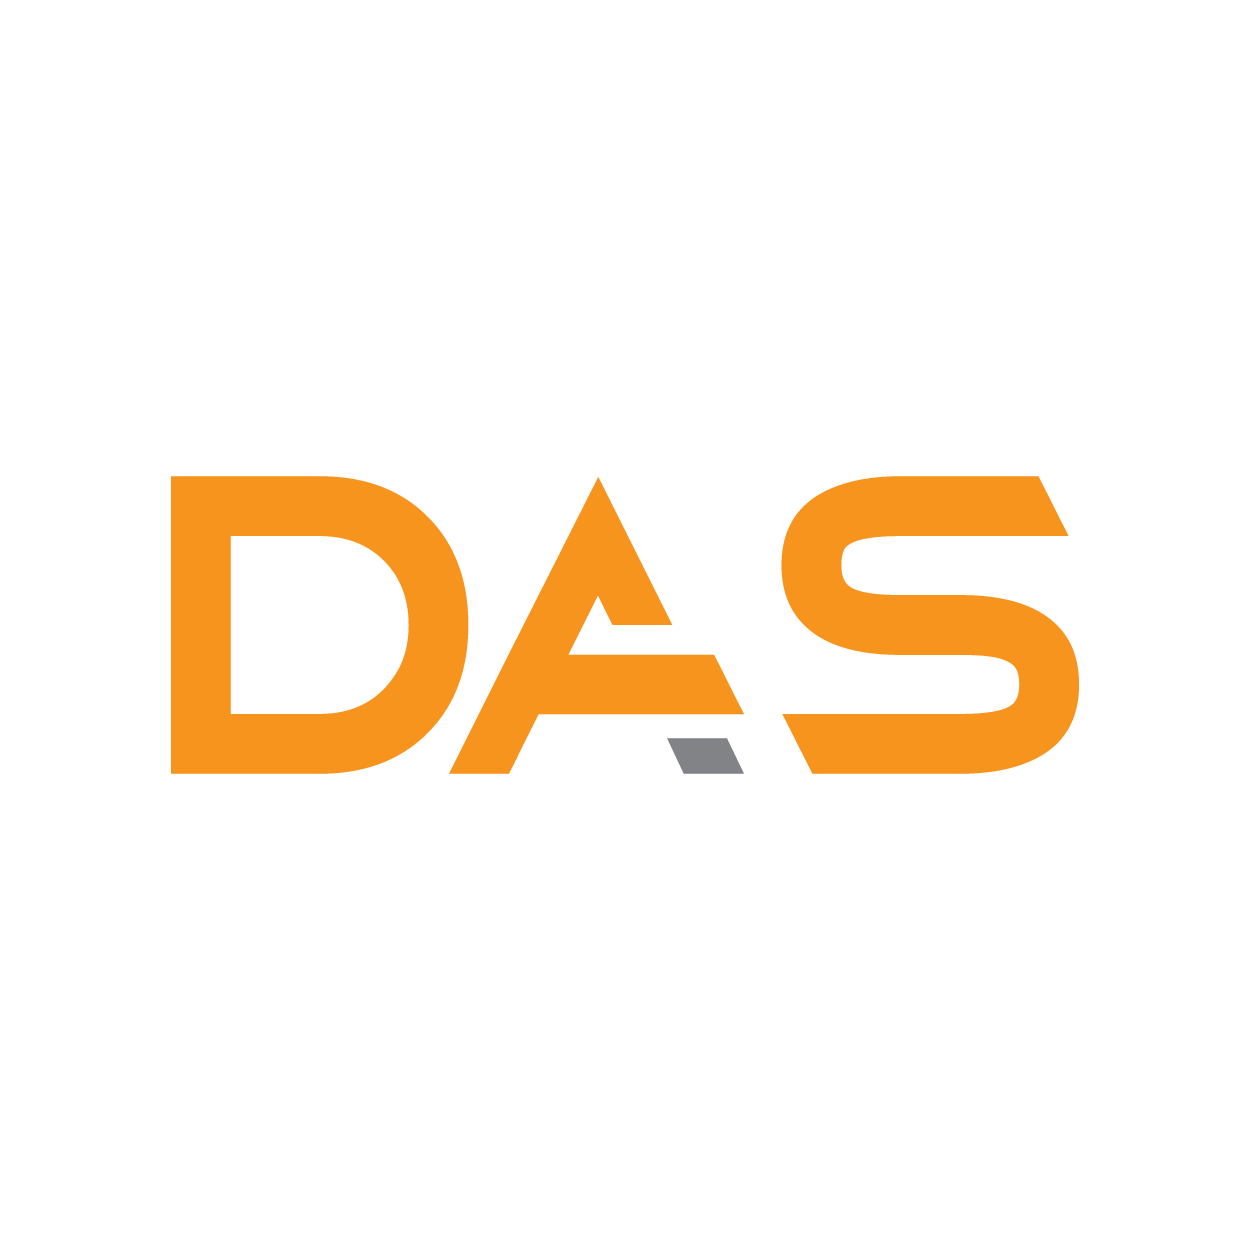 DAS HANDLING LTD is an independent ground handling service provider based at Entebbe International Airport.